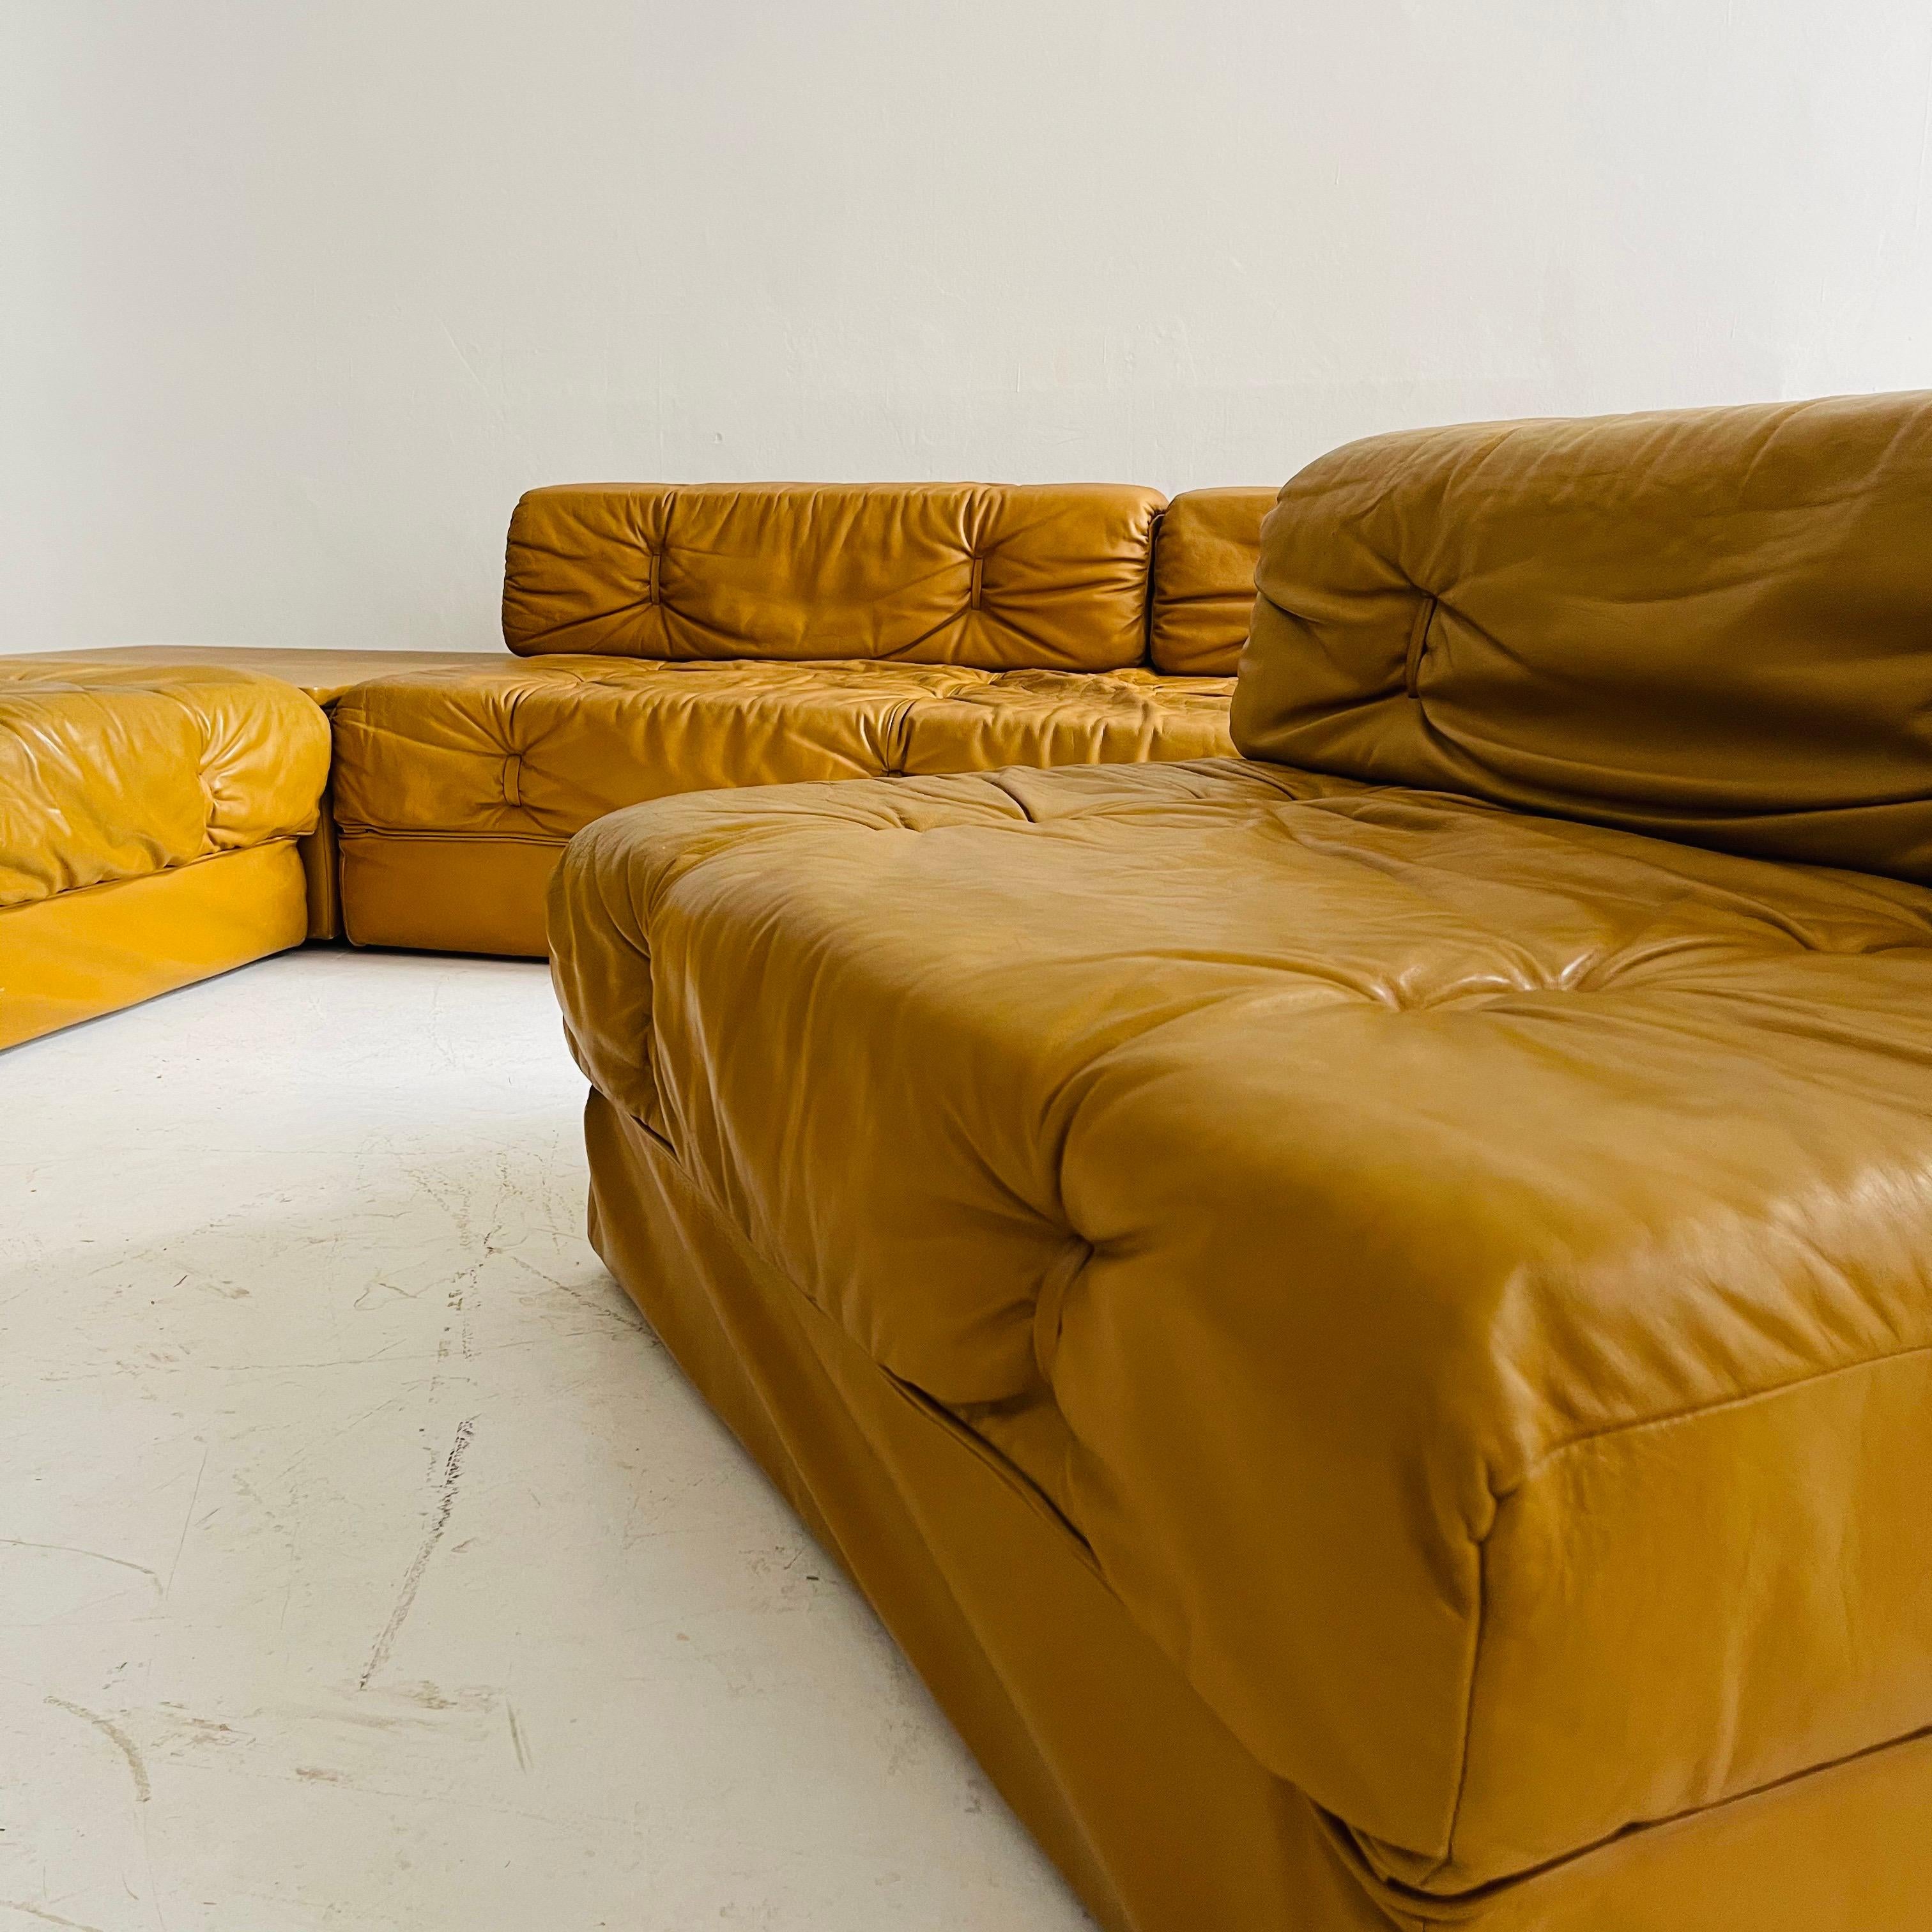 Wittmann Atrium Cognac Leather Living Room Suite Sofa Daybeds, Austria, 1970s For Sale 10